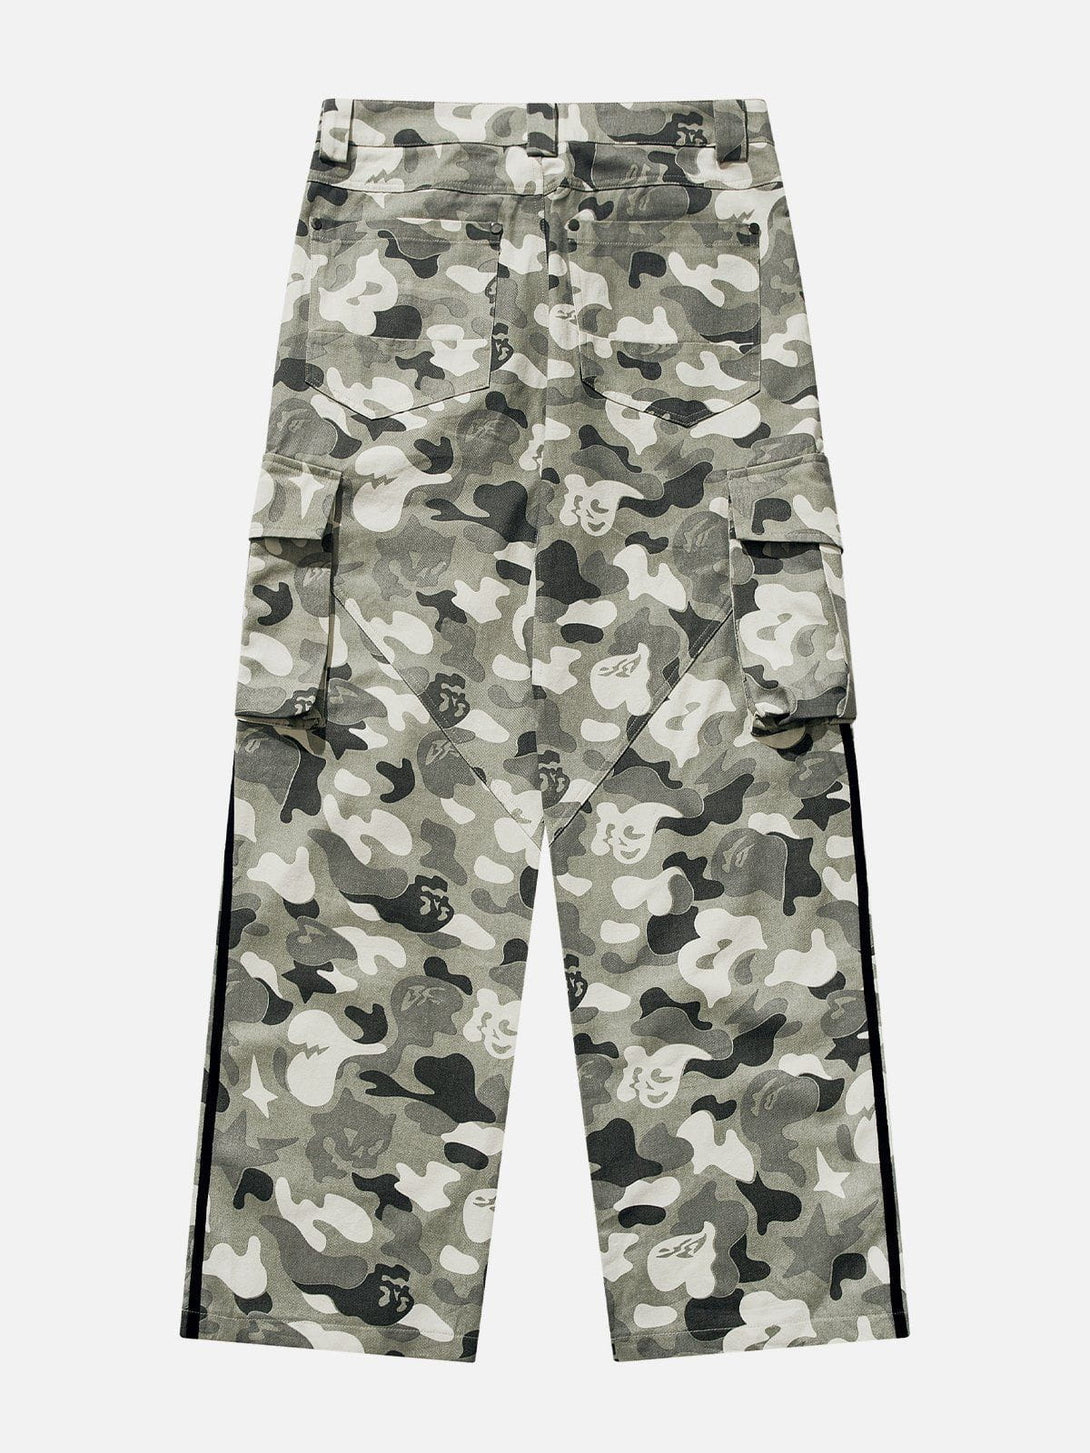 Levefly - Camouflage Multi-pocket Cargo Pants - Streetwear Fashion - levefly.com